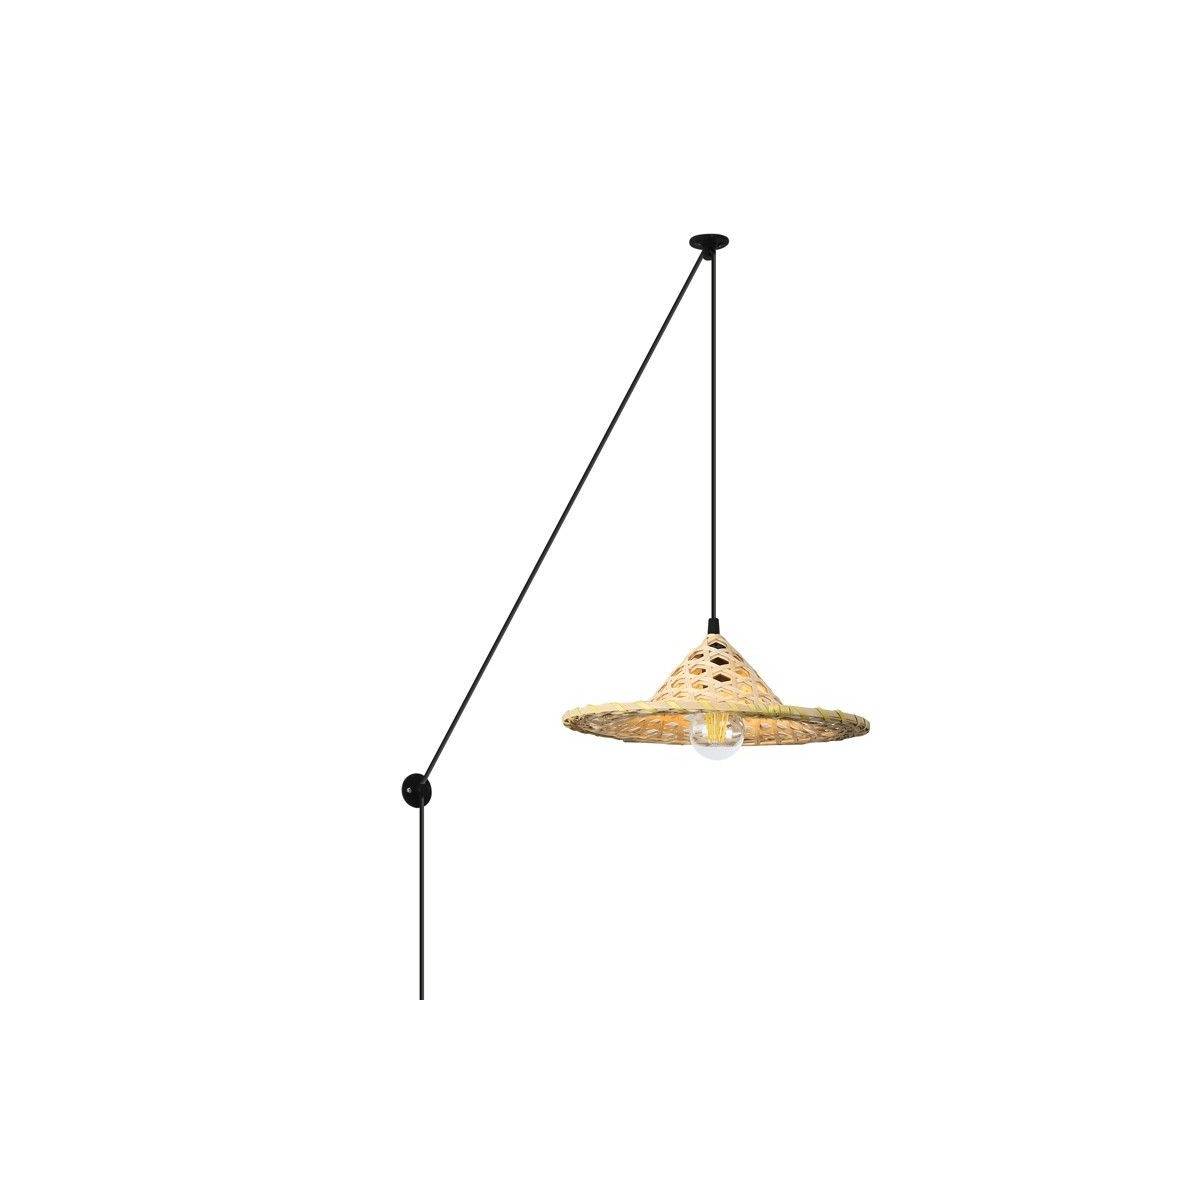 Bamboo pendant lamp with plug "NONA".